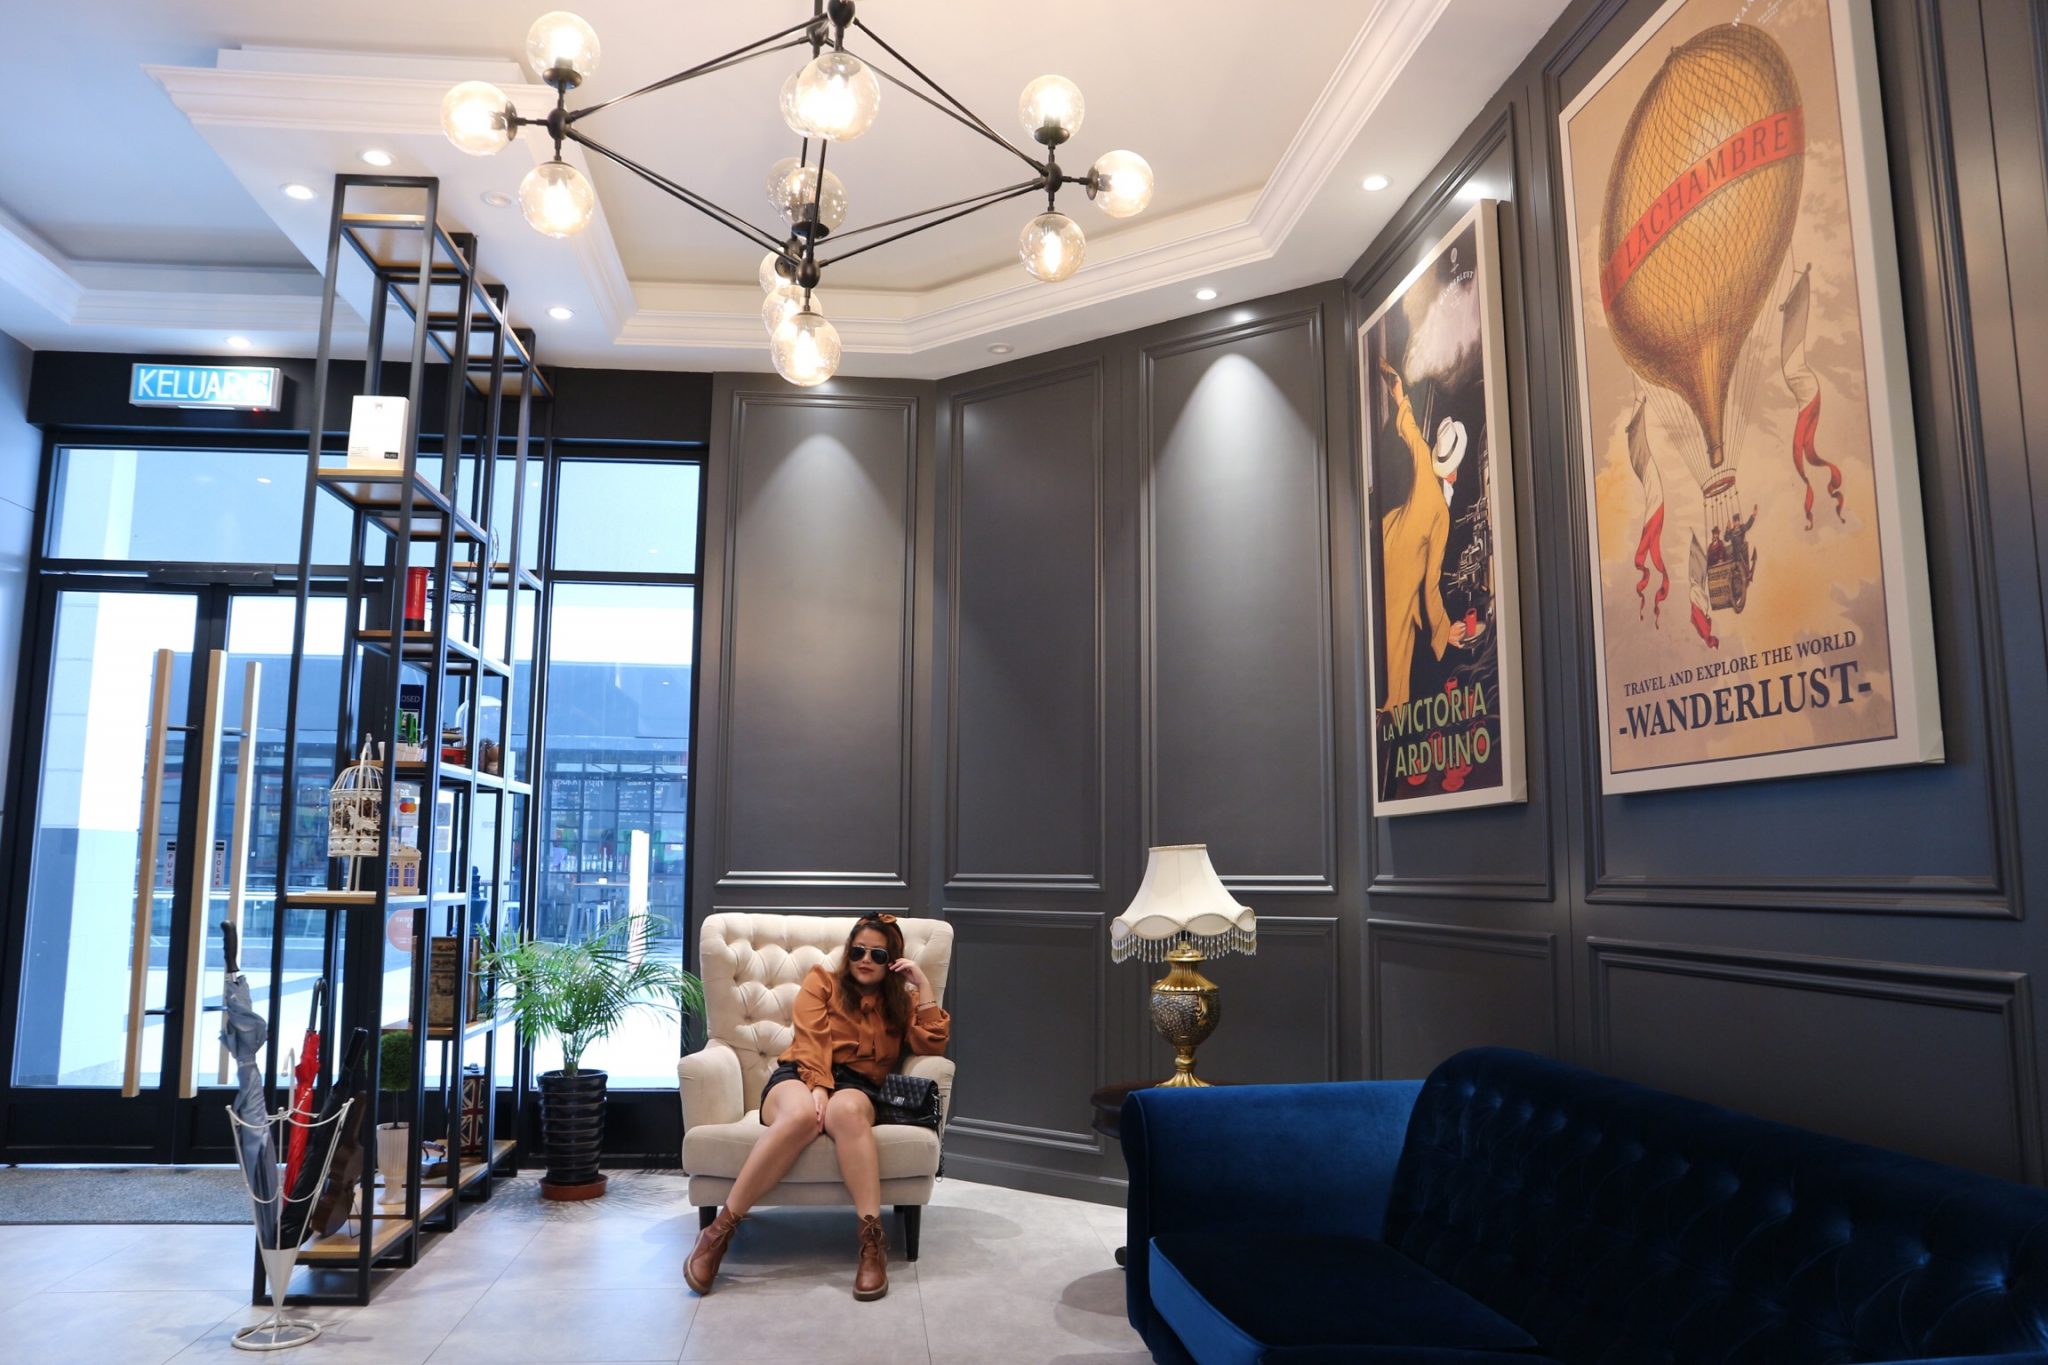 H Boutique Hotel: Quirky Budget Hotel in Kota Damansara